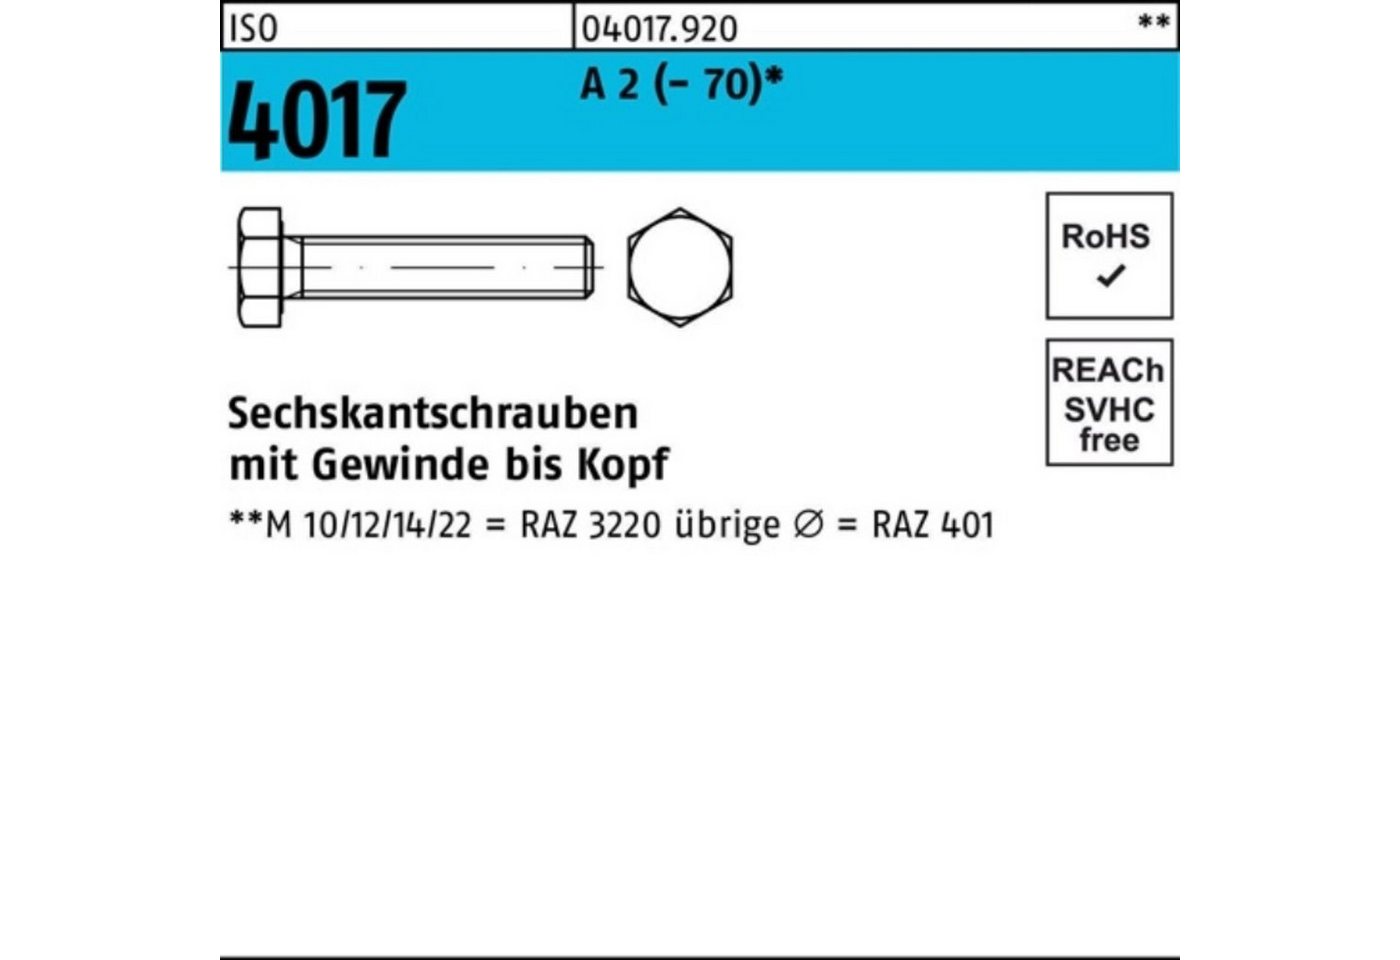 Bufab Sechskantschraube 100er Pack Sechskantschraube ISO 4017 VG M12x 45 A 2 (70) 100 Stück von Bufab